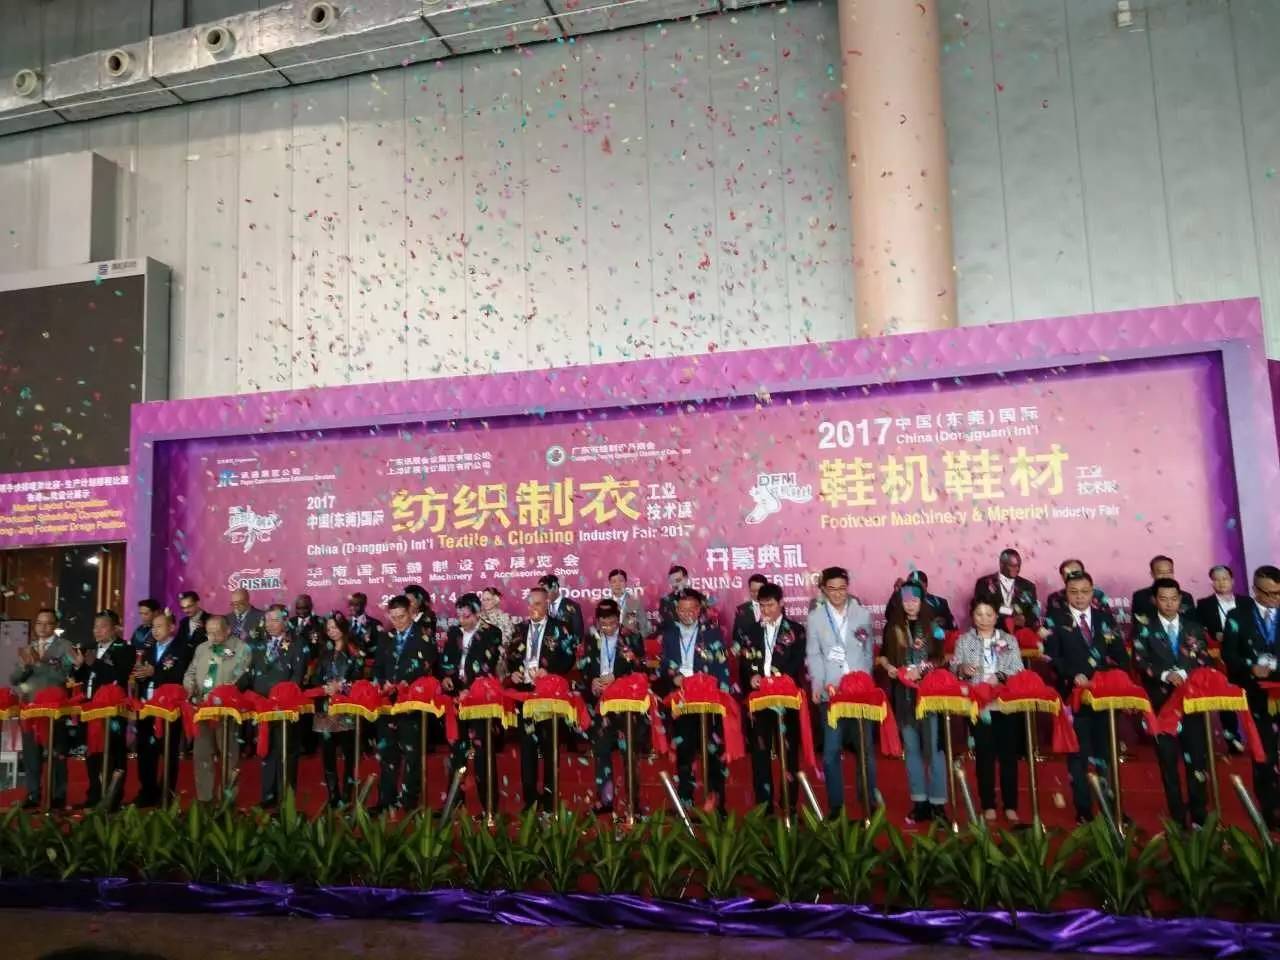 2017 China (Dongguan) Shoe Machine Shoe Material Industry Technology Exhibition 300 Enterprises Brings 